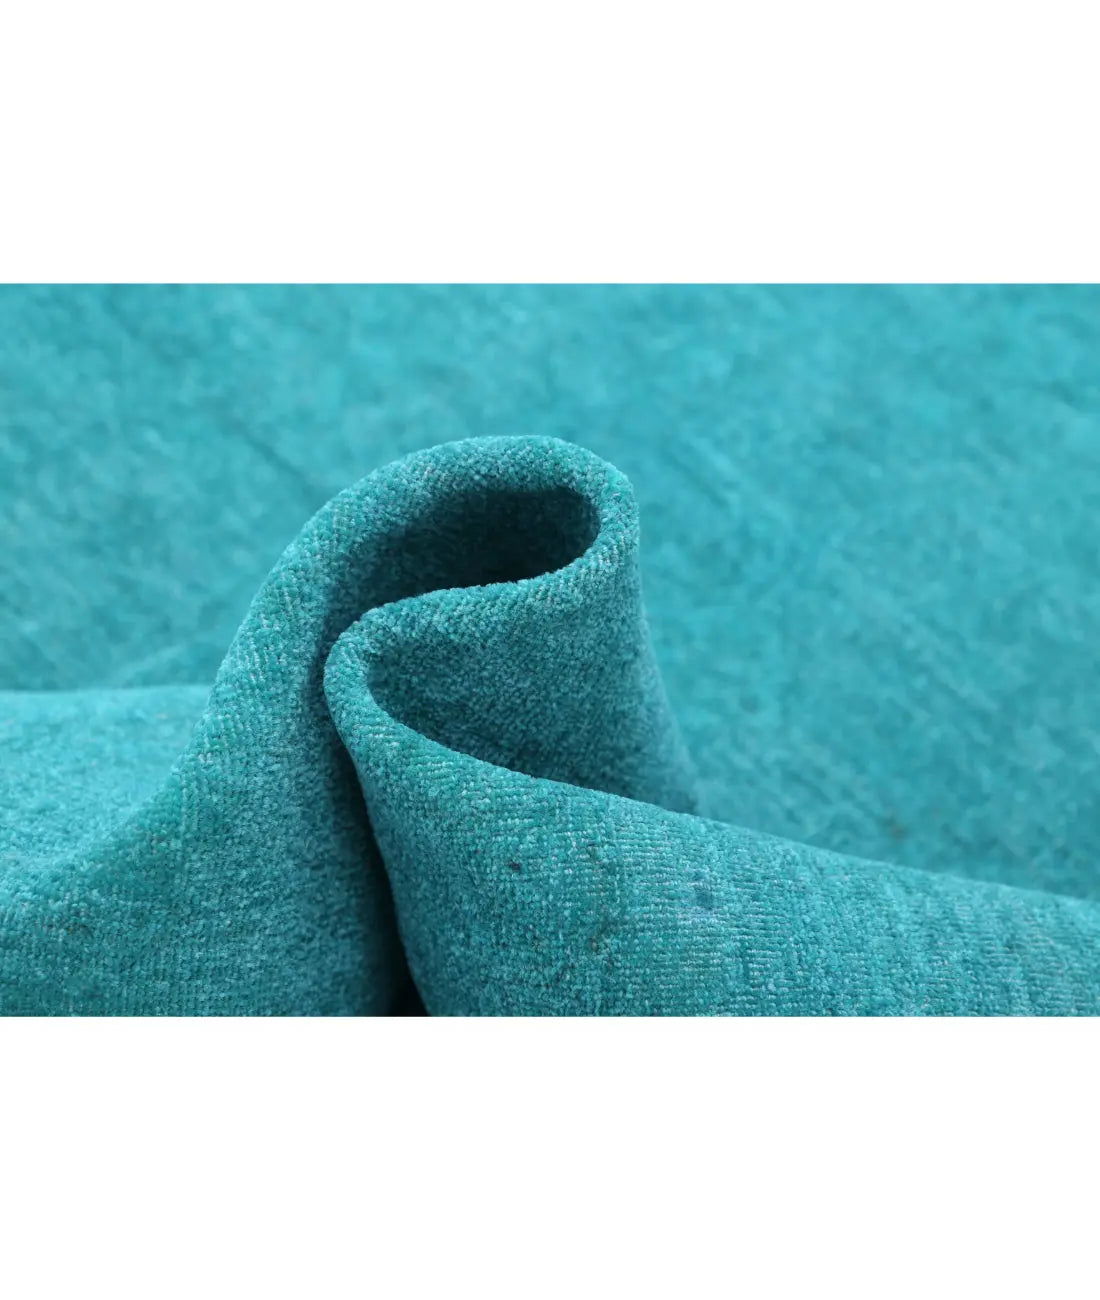 Hand Knotted Overdye Wool Rug - 9'1'' x 12'0'' - Arteverk Rugs Area rug